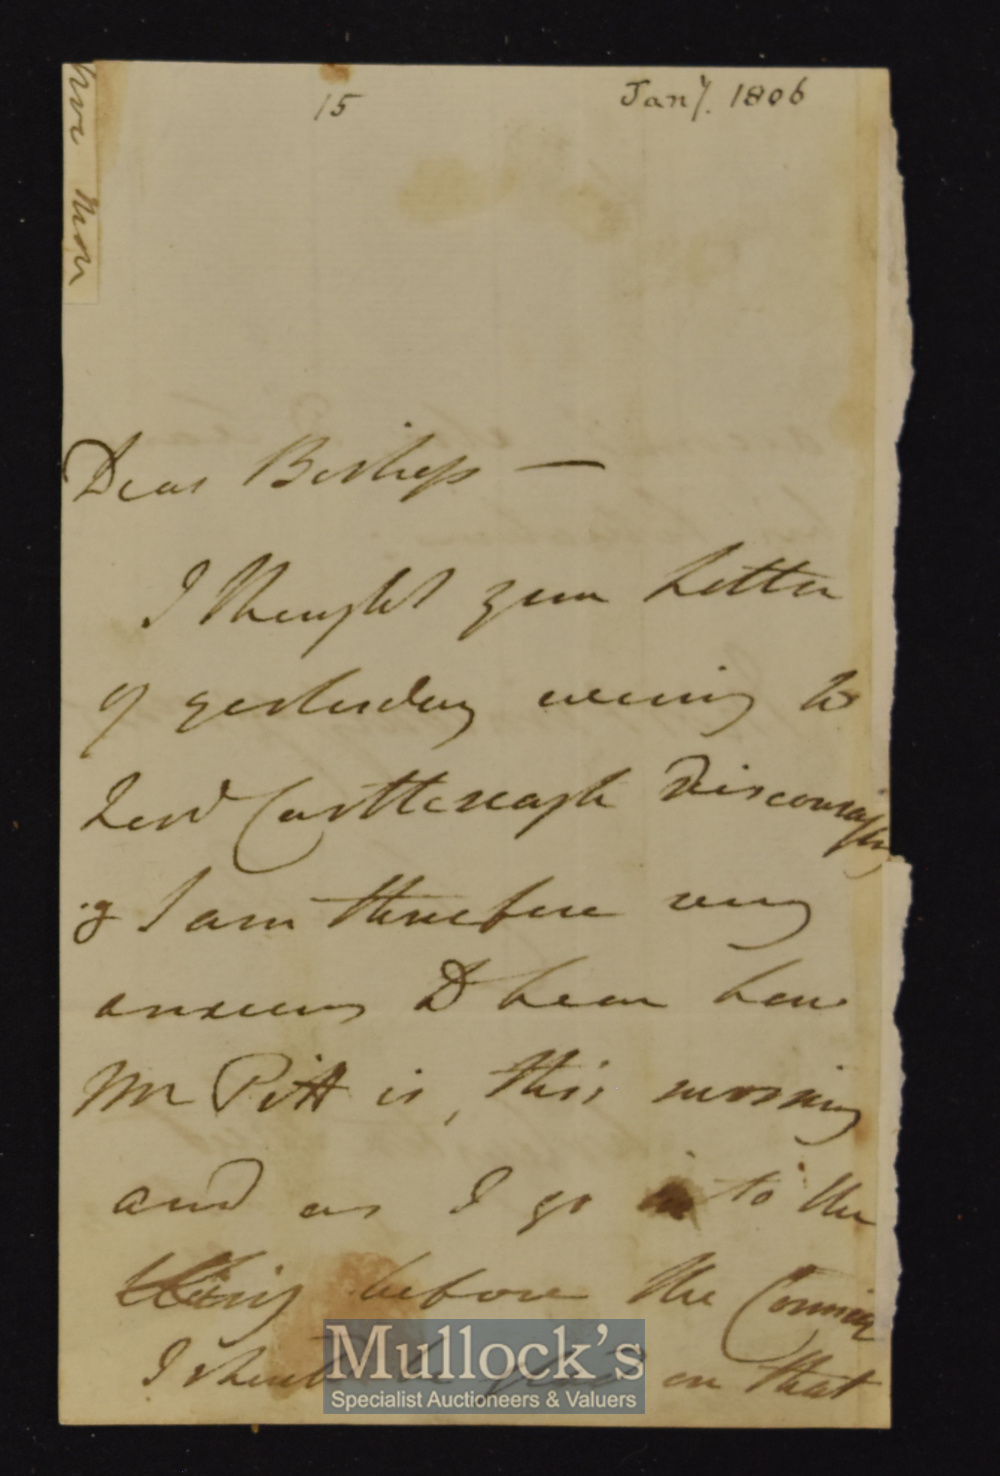 Pitt on his death bed – Anxious Enquiry into his health – John Pratt (Lord Camden) 1806 Autograph